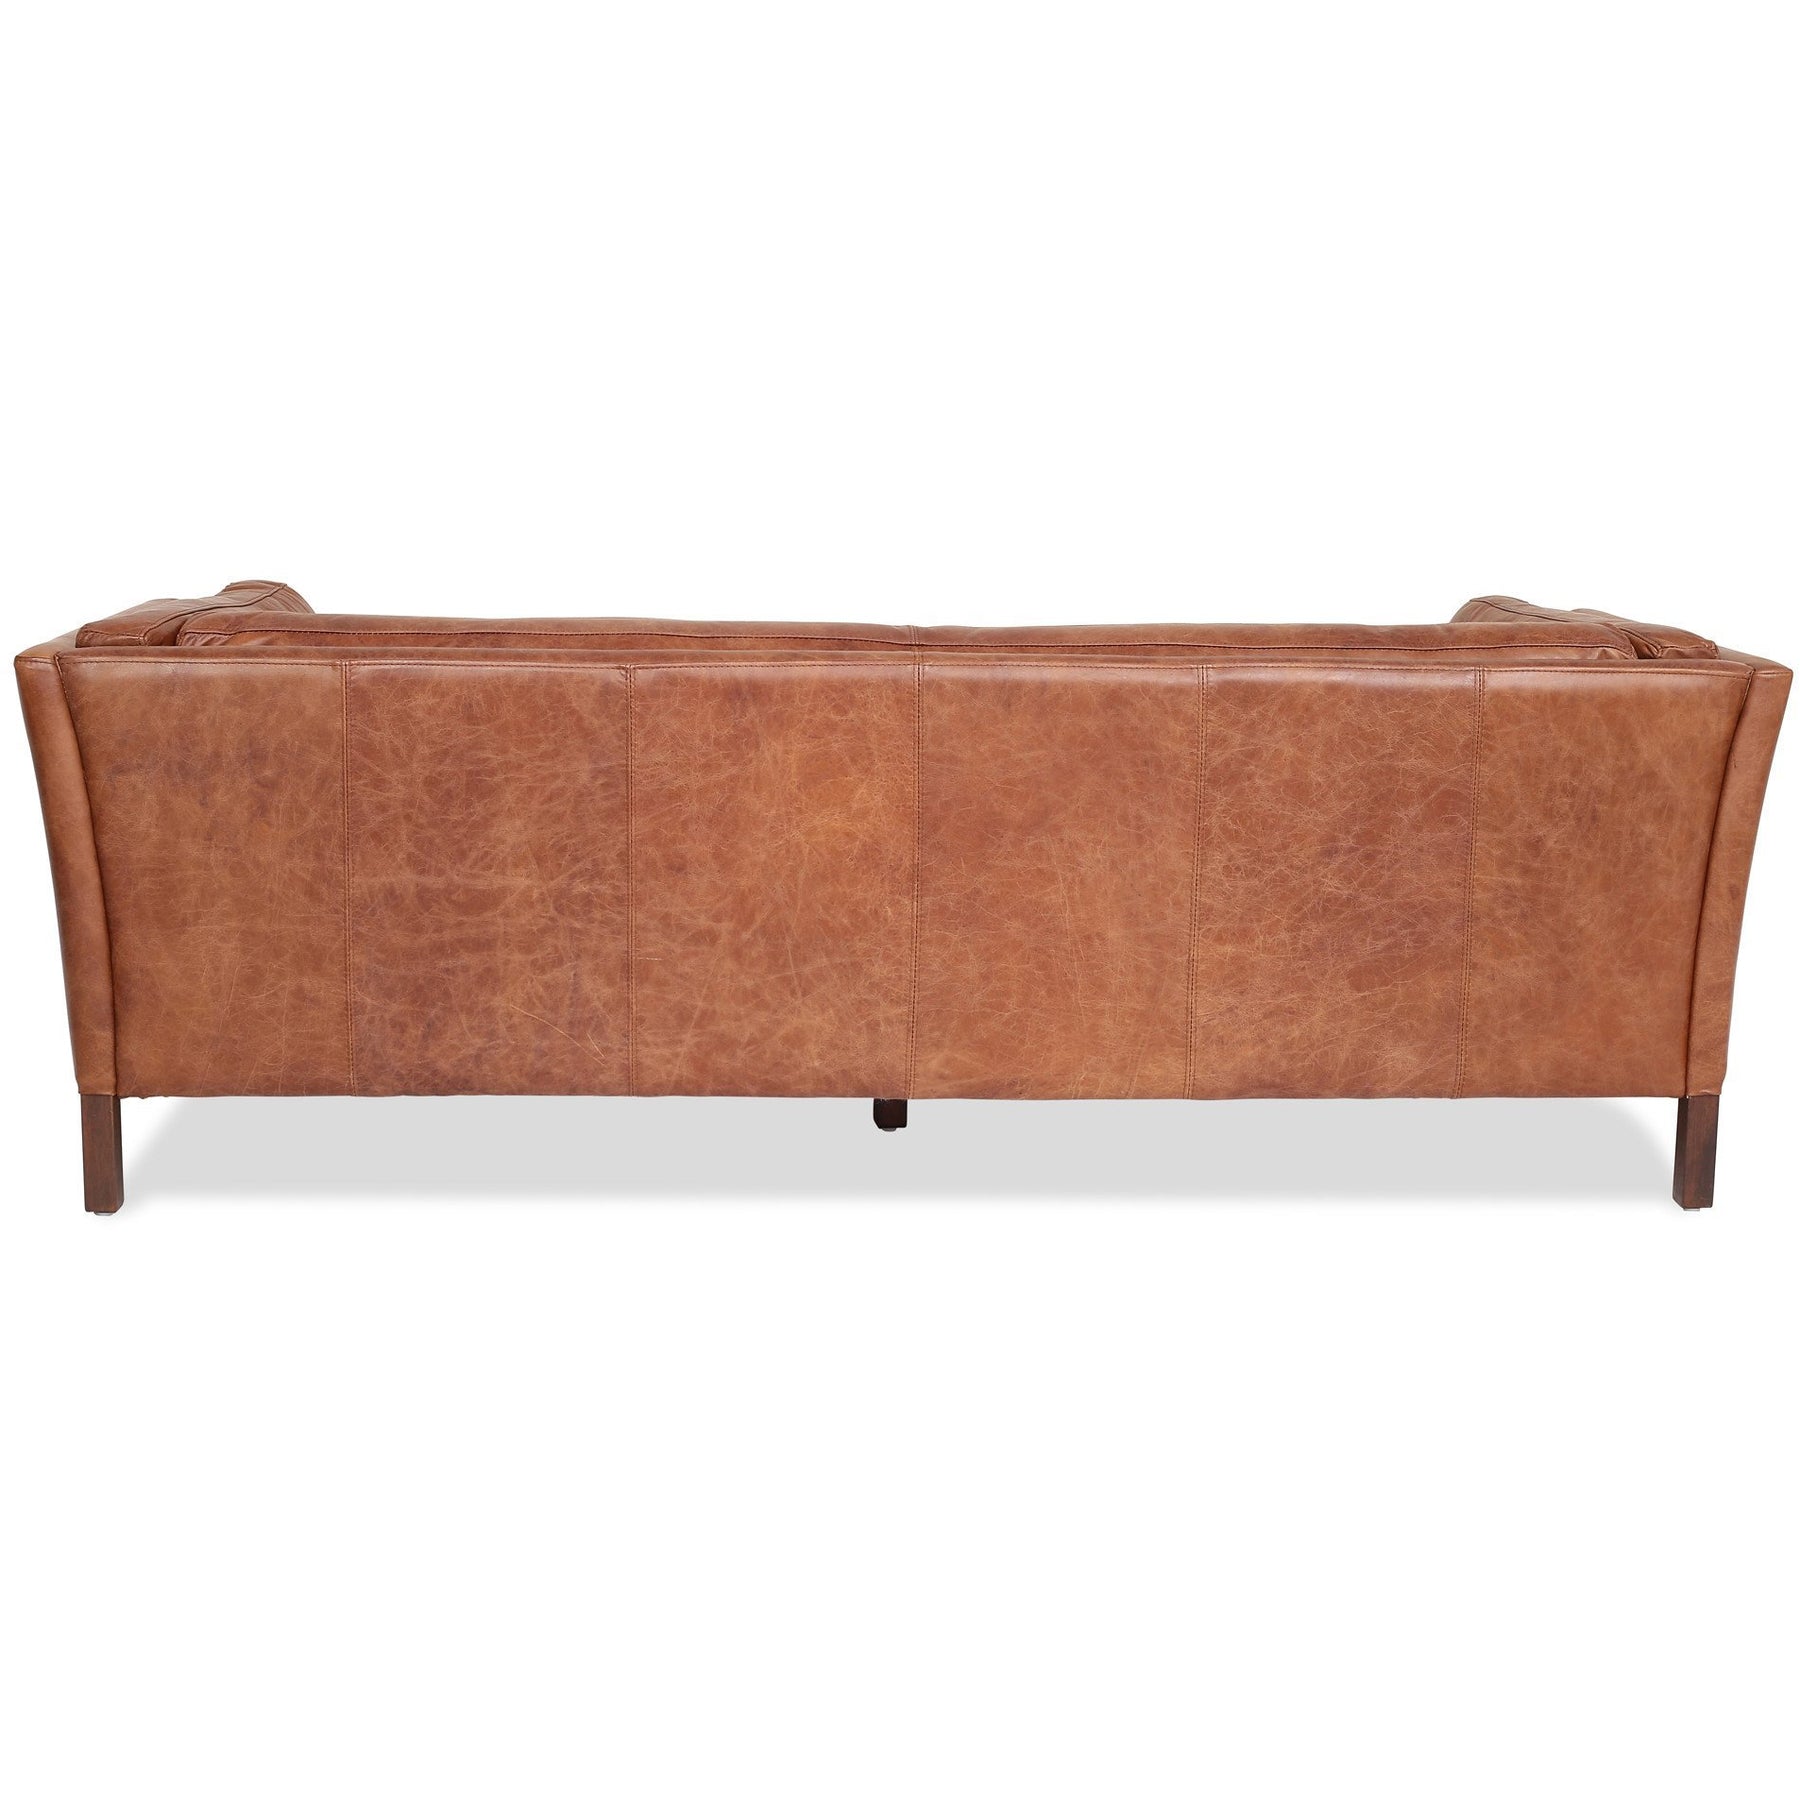 Edloe Finch Finley Leather Sofa